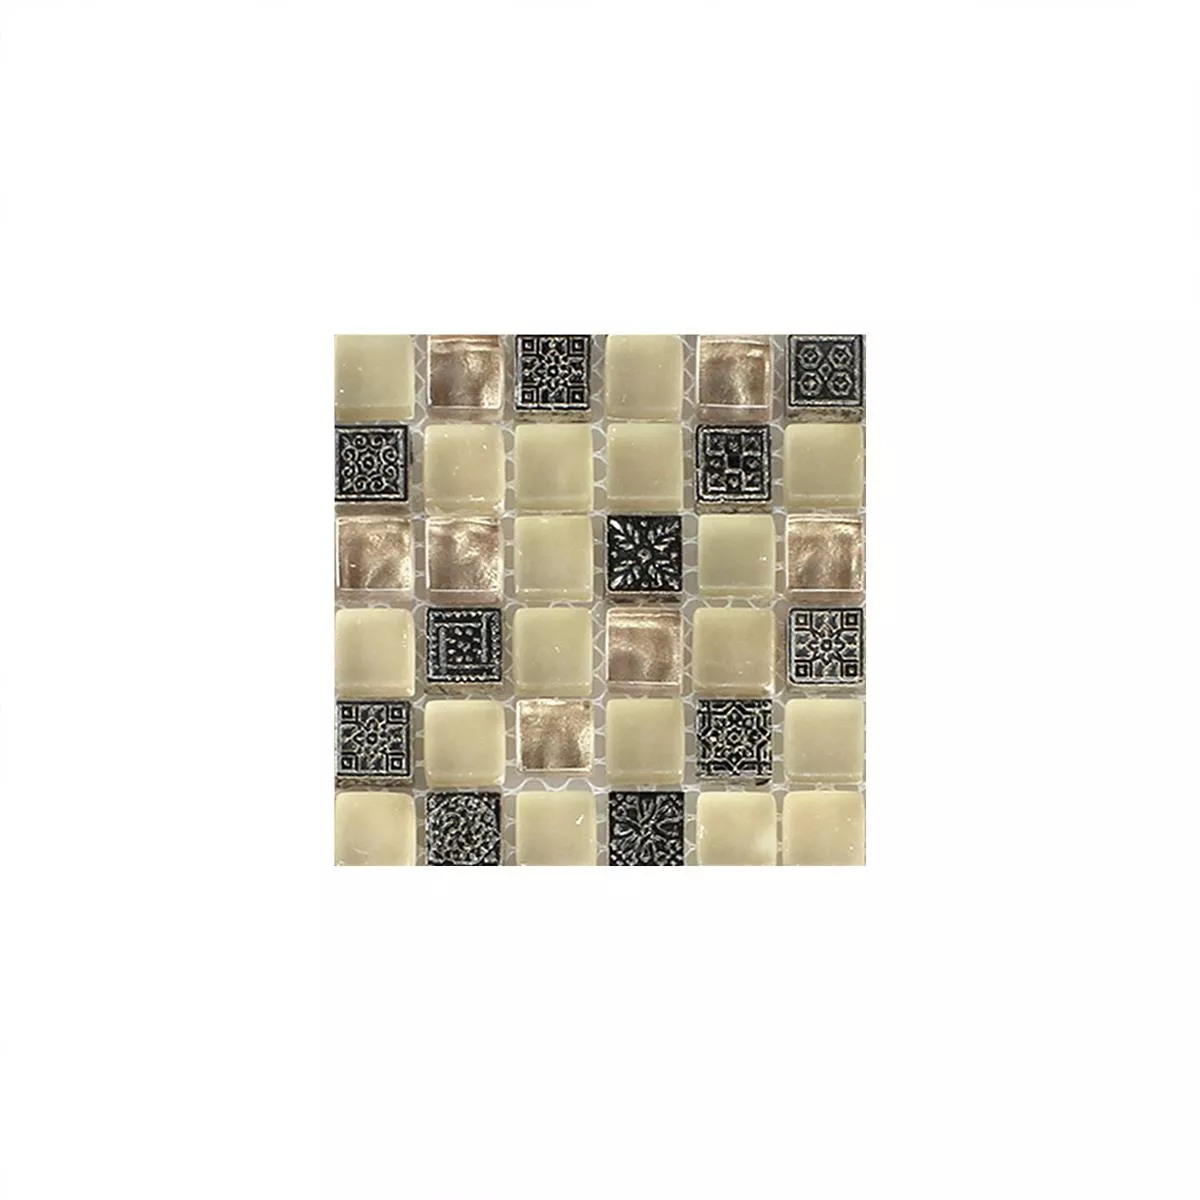 Sample Mosaic Tiles Glass Natural Stone Ornament Beige Mix